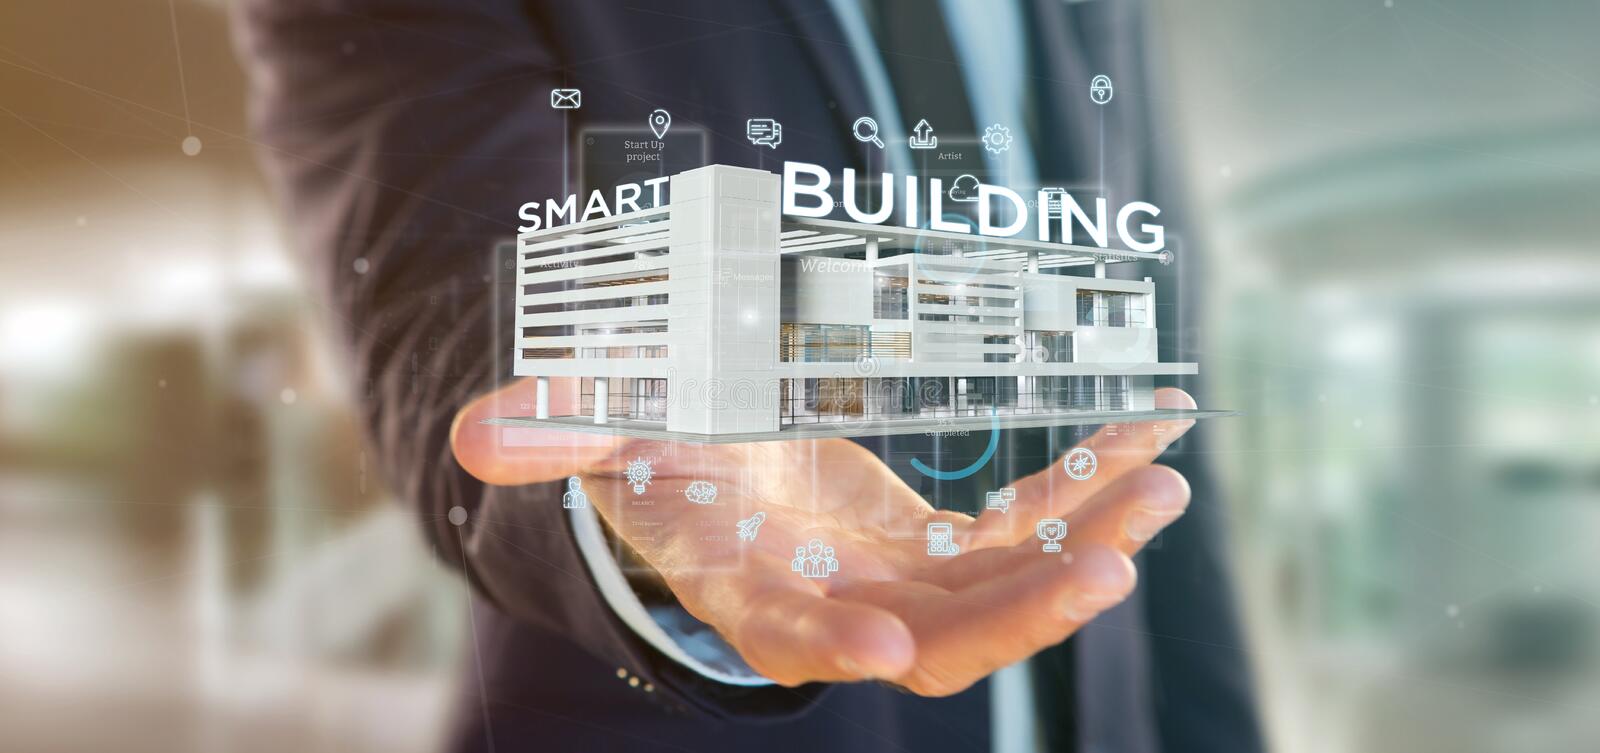 Smart Buildings Solutions